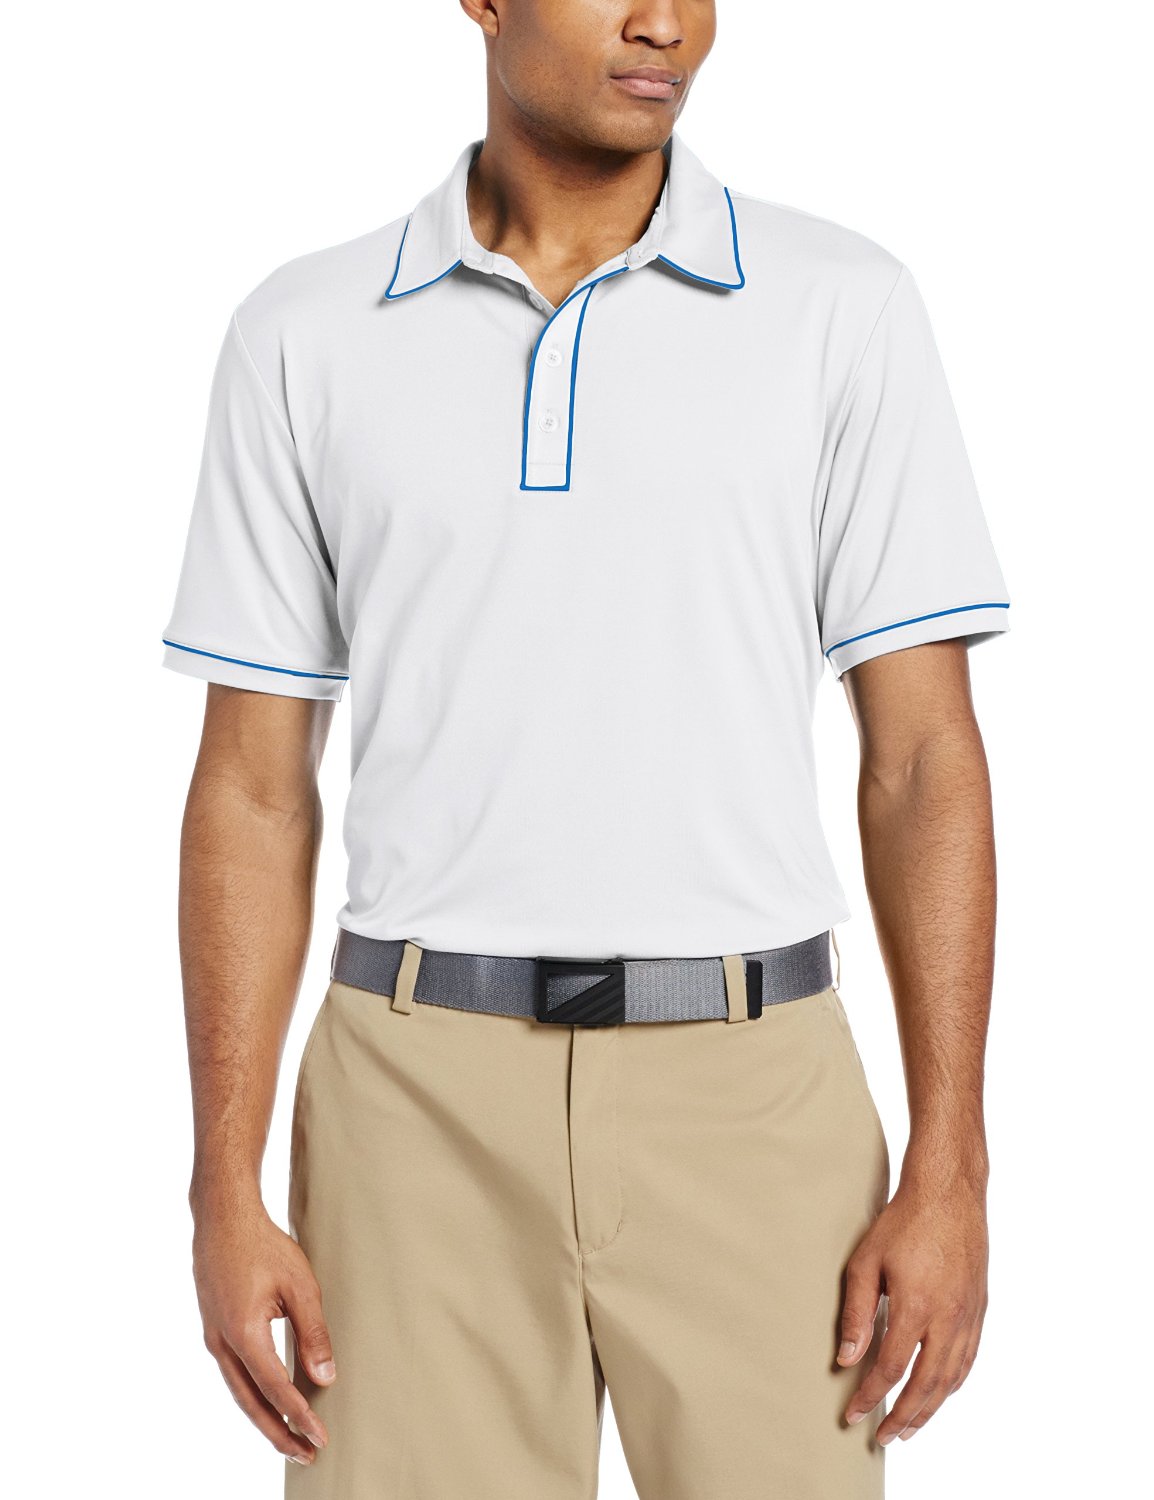 Mens Adidas Puremotion Piped Golf Polo Shirts